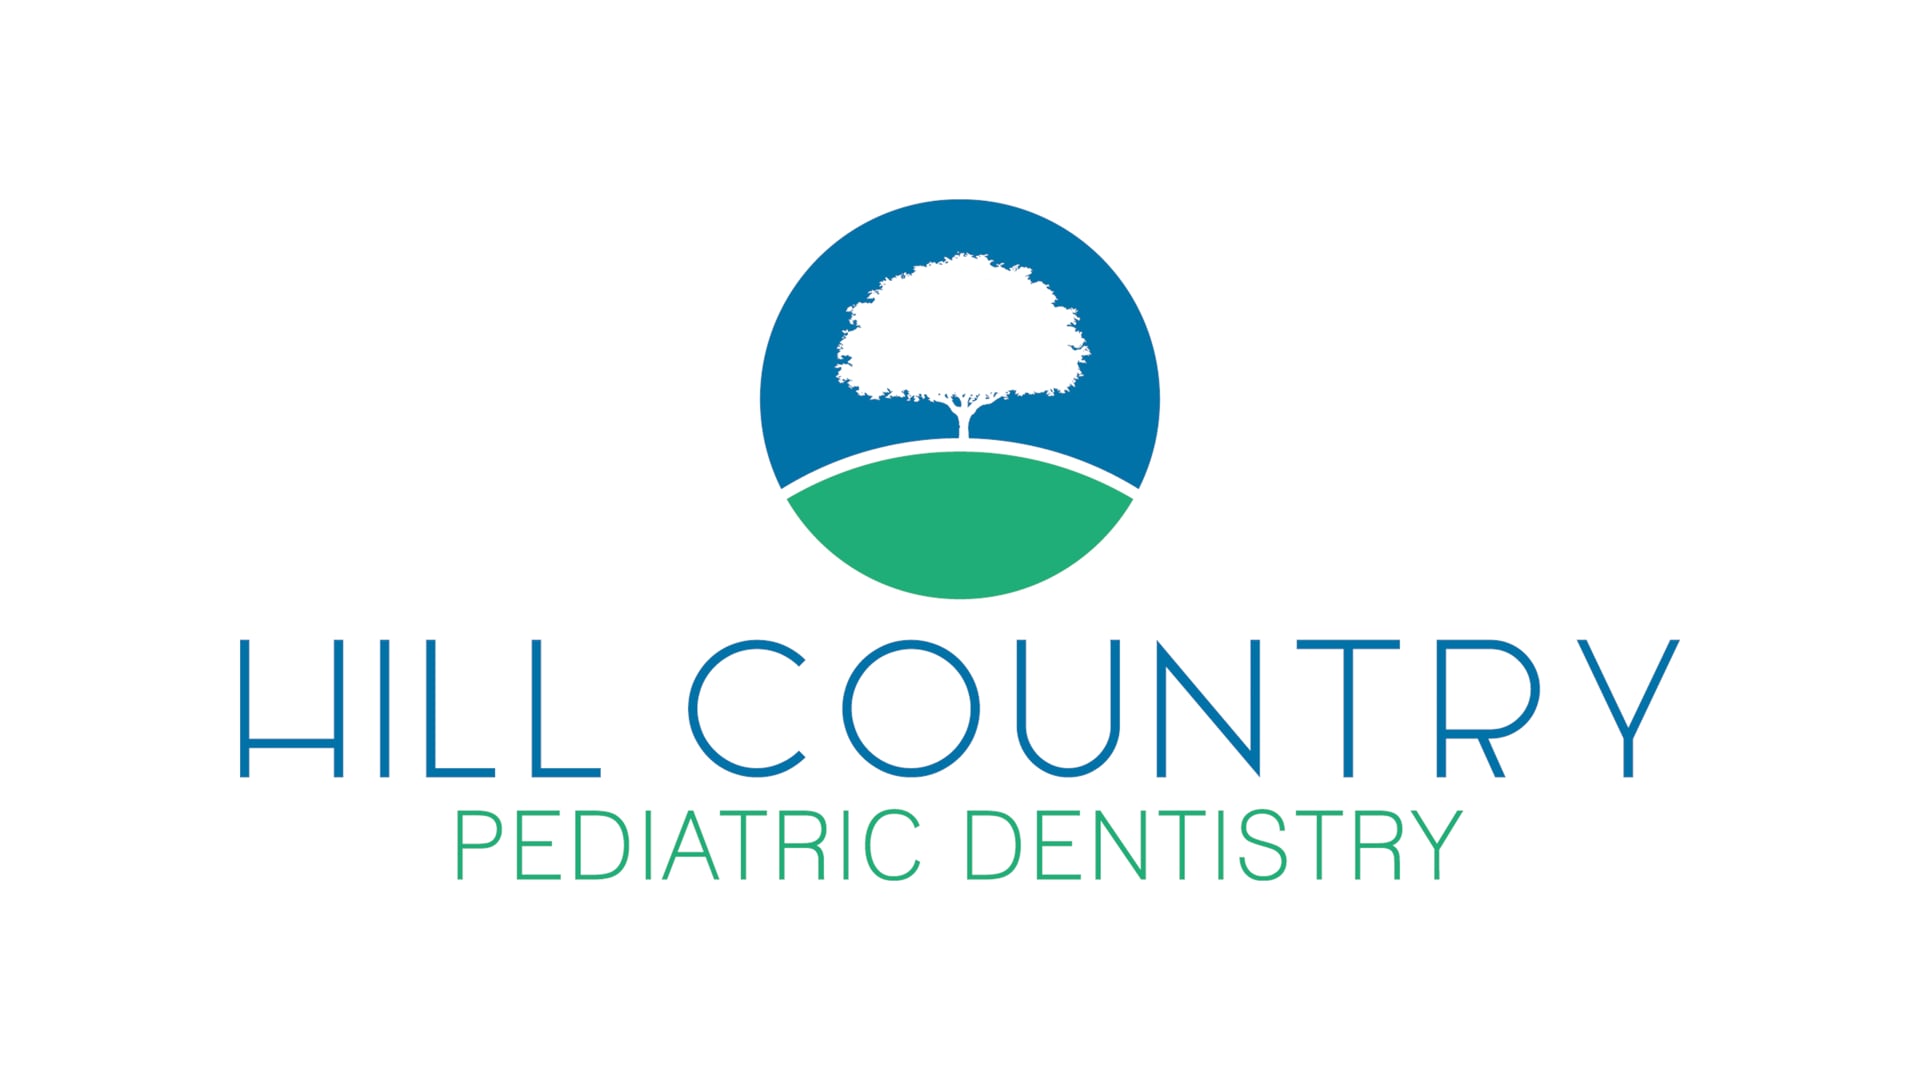 Hill Country Pediatric Dentistry